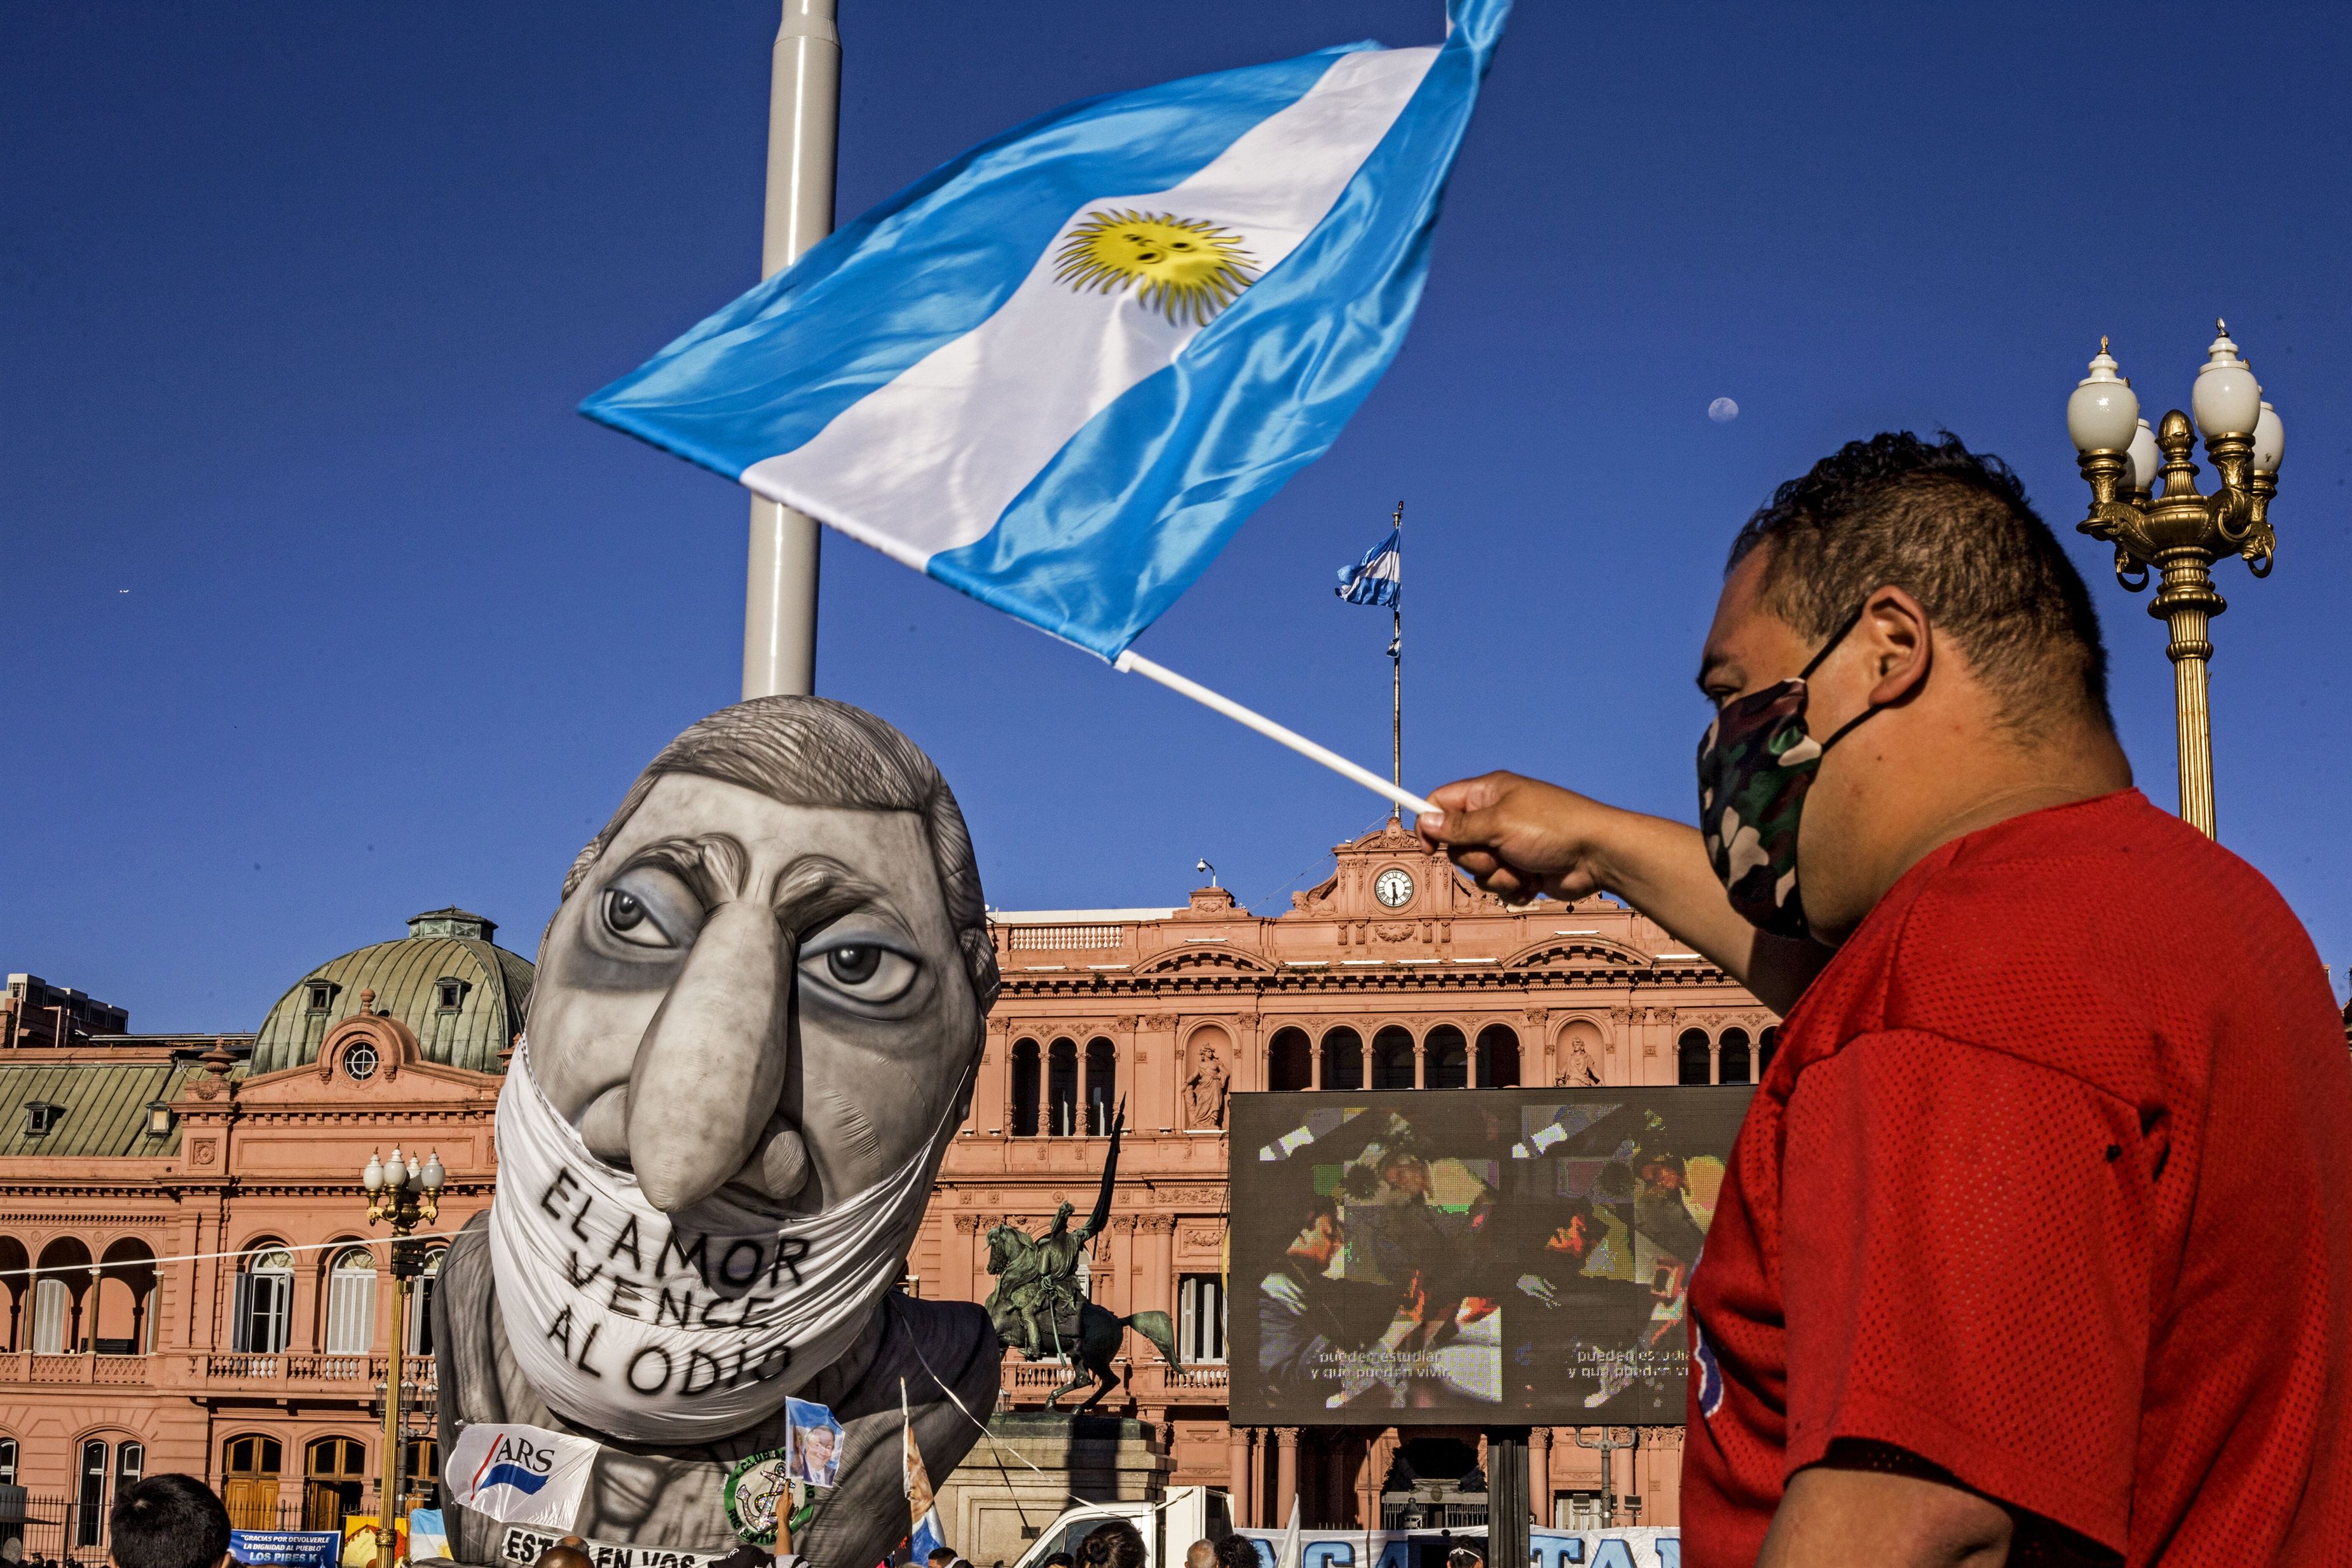 27/10/2020 Un hombre frente a la Casa Rosada en Buenos Aires en plena pandemia del coronavirus. POLITICA ROBERTO ALMEIDA AVELEDO / ZUMA PRESS / CONTACTOPHO 